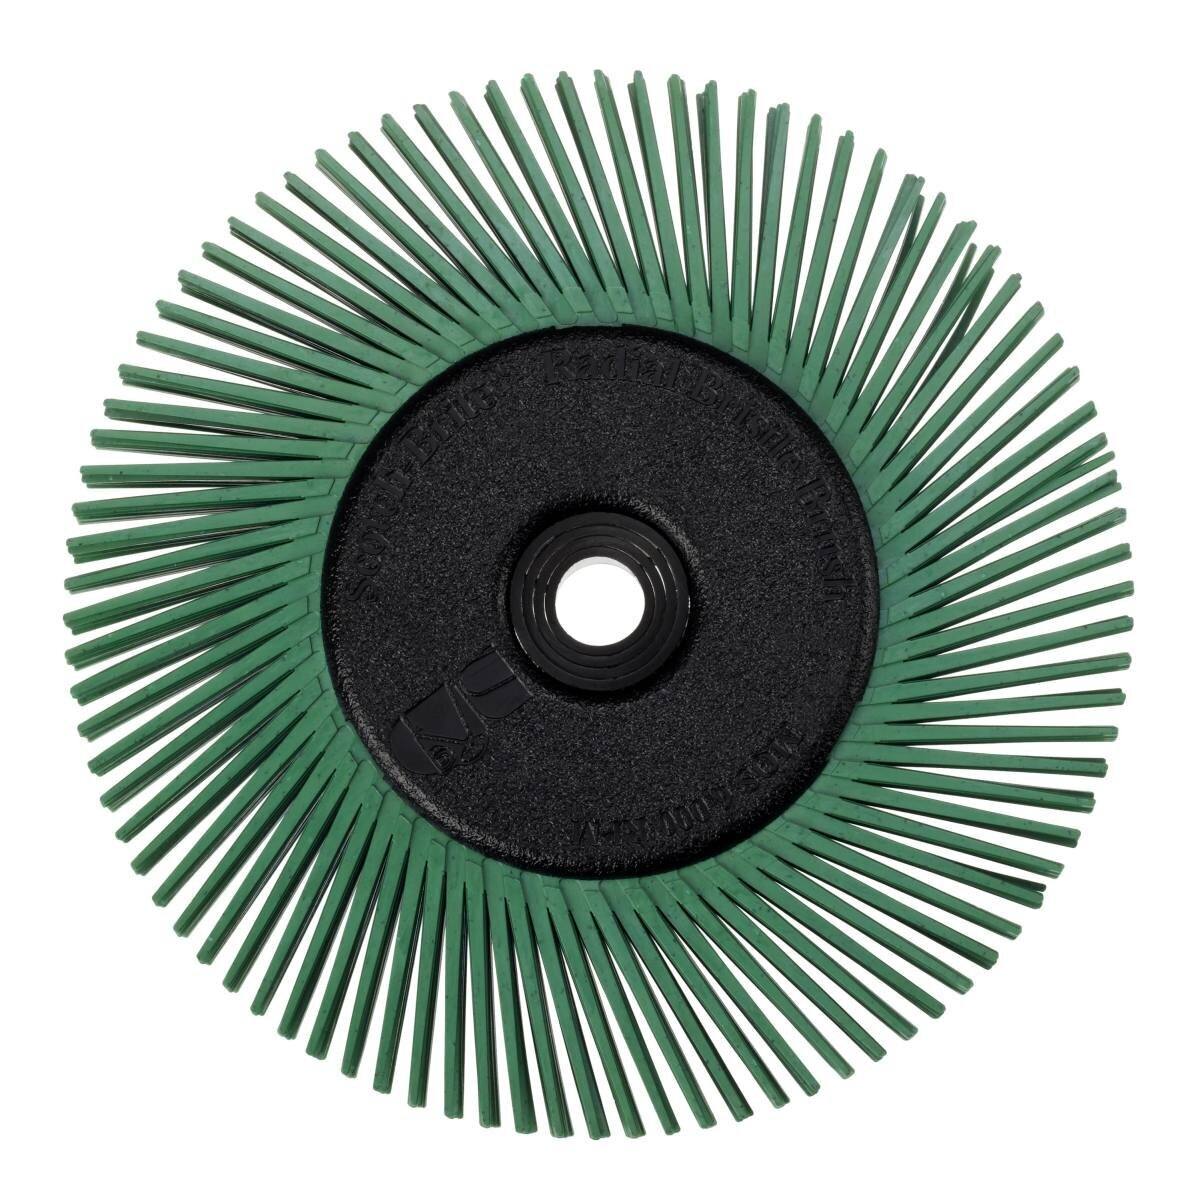 3M Scotch-Brite Radial Bristle Disc BB-ZB mit Flansch, grün, 152,4 mm, P50, Typ A #27605